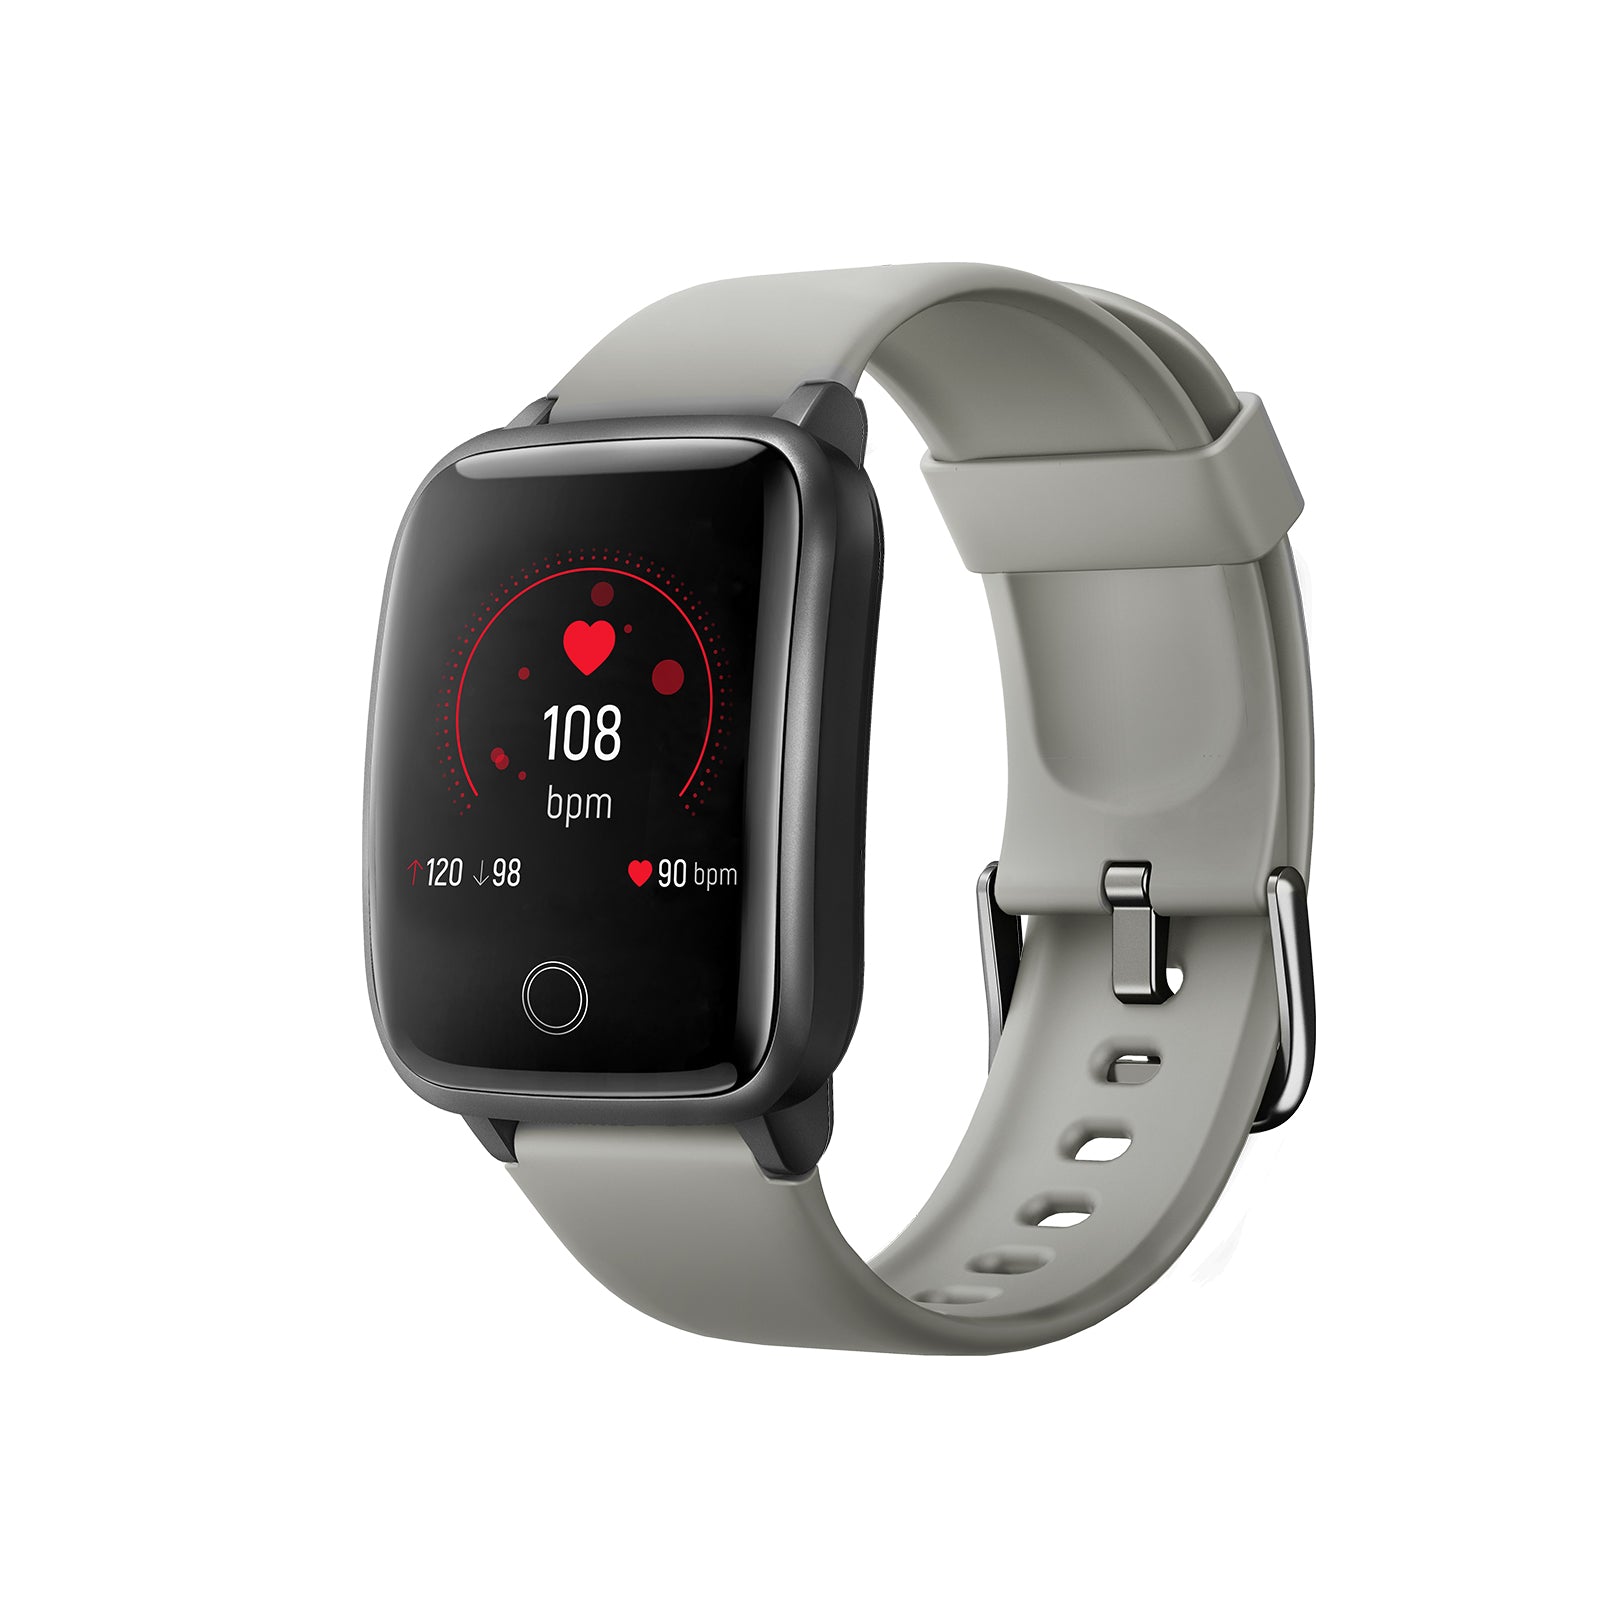 FitSmart Smart Watch Bluetooth Heart Rate Monitor Waterproof LCD Touch Screen